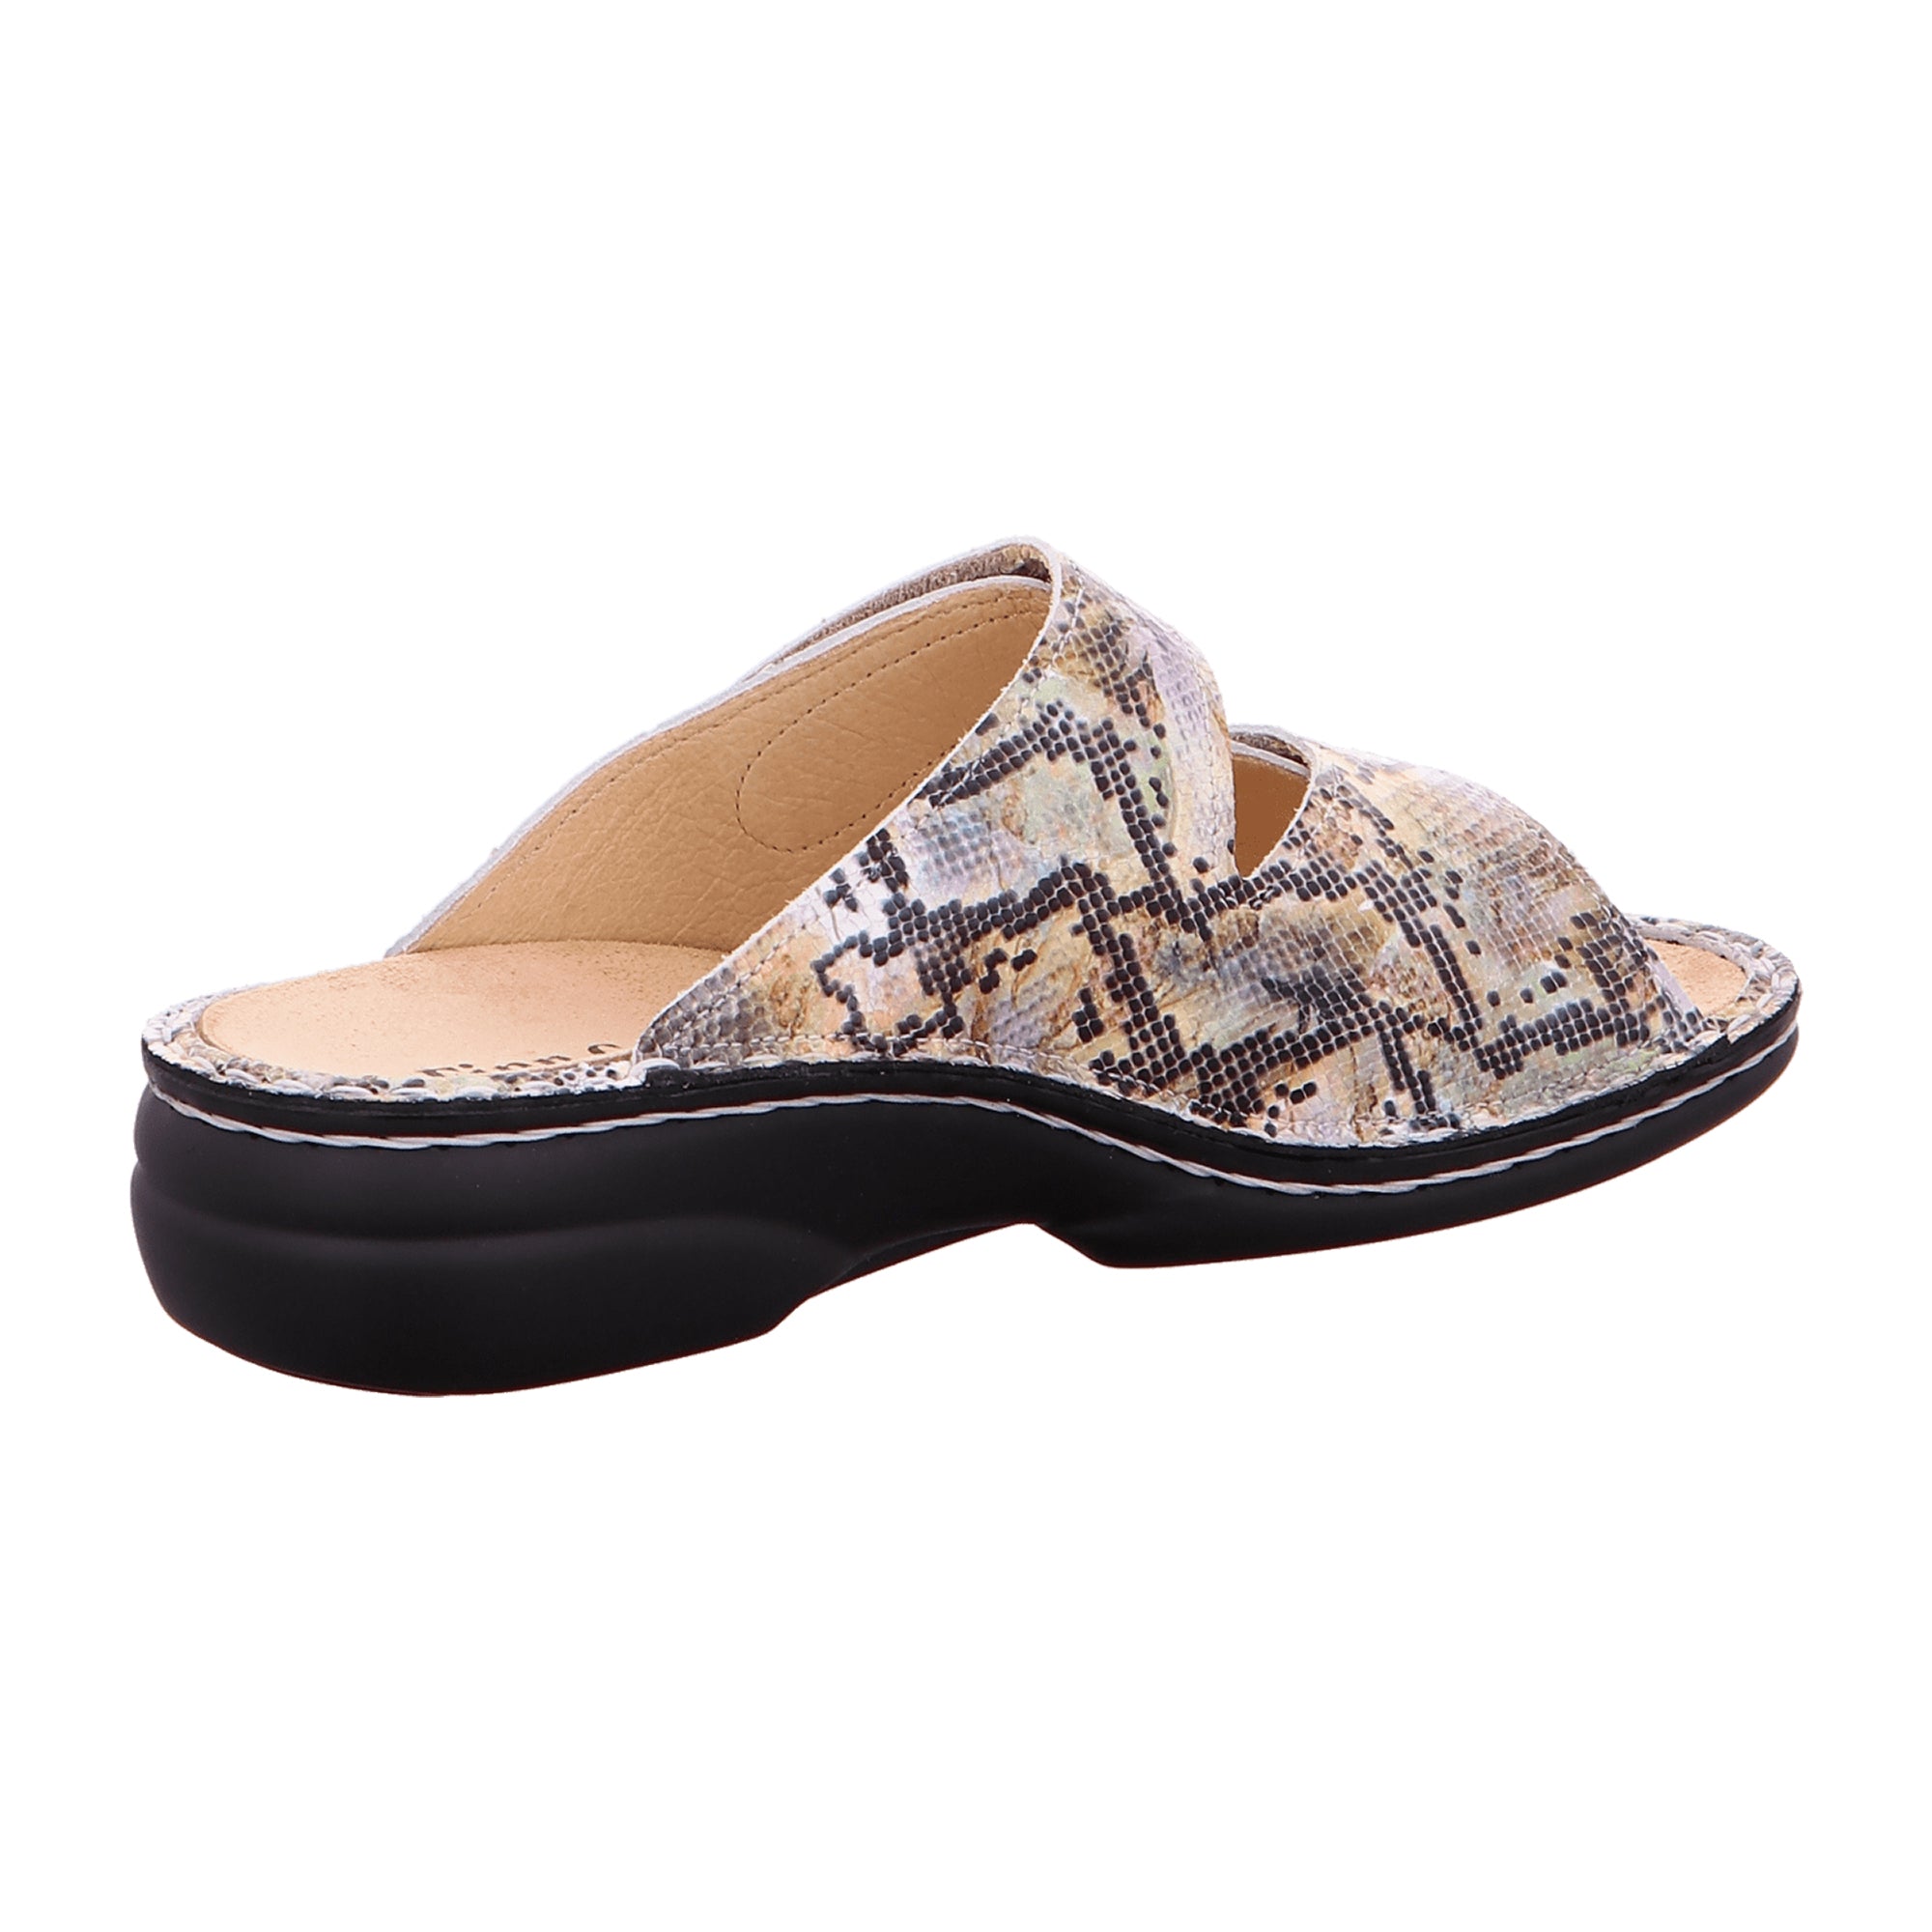 Finn Comfort Torbole Women’s Sandals in Elegant Beige – Comfortable & Stylish